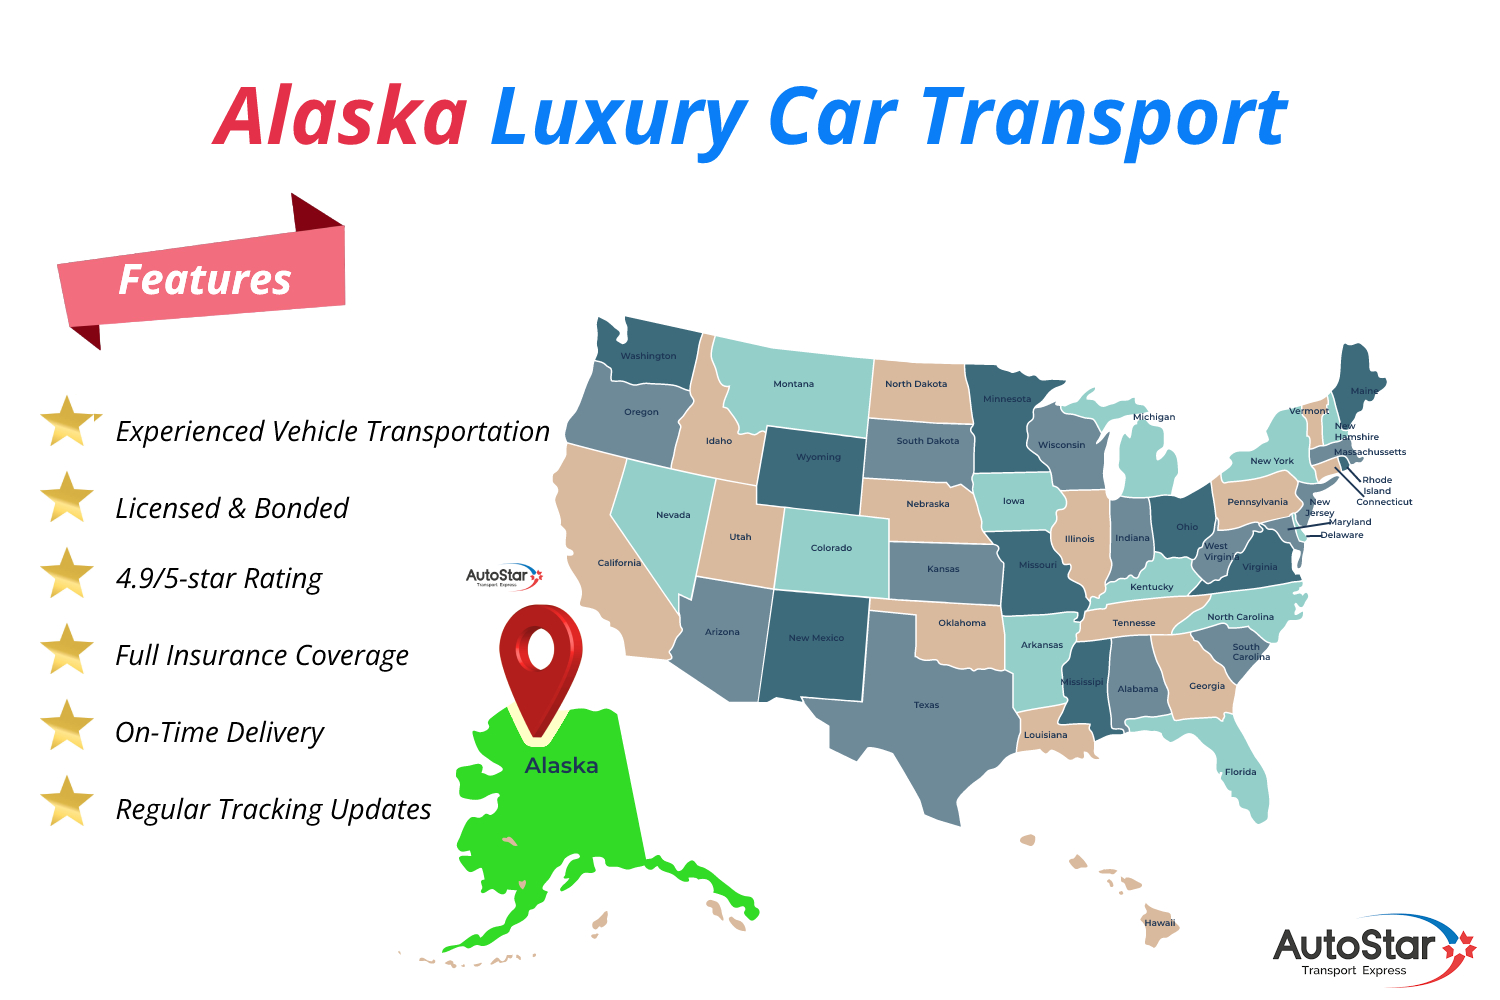 Alaska Luxury Car Transport